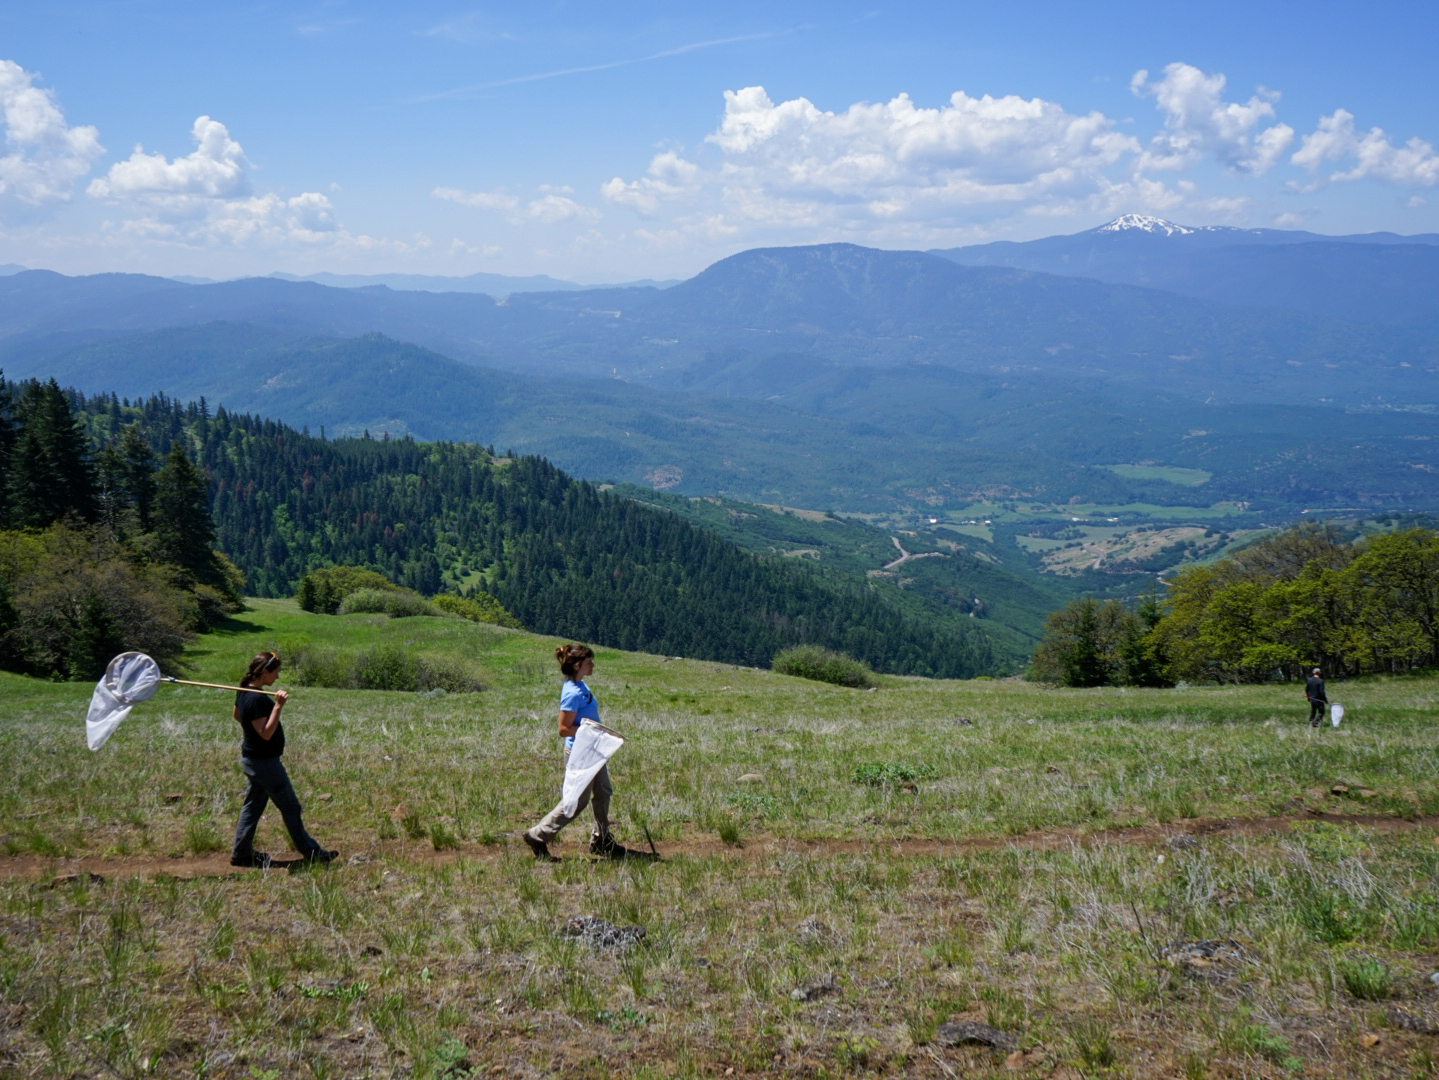 Amid a mountainous, meadow-strewn landscape, three people holding butterfly nets walk along a narrow, dirt trail.